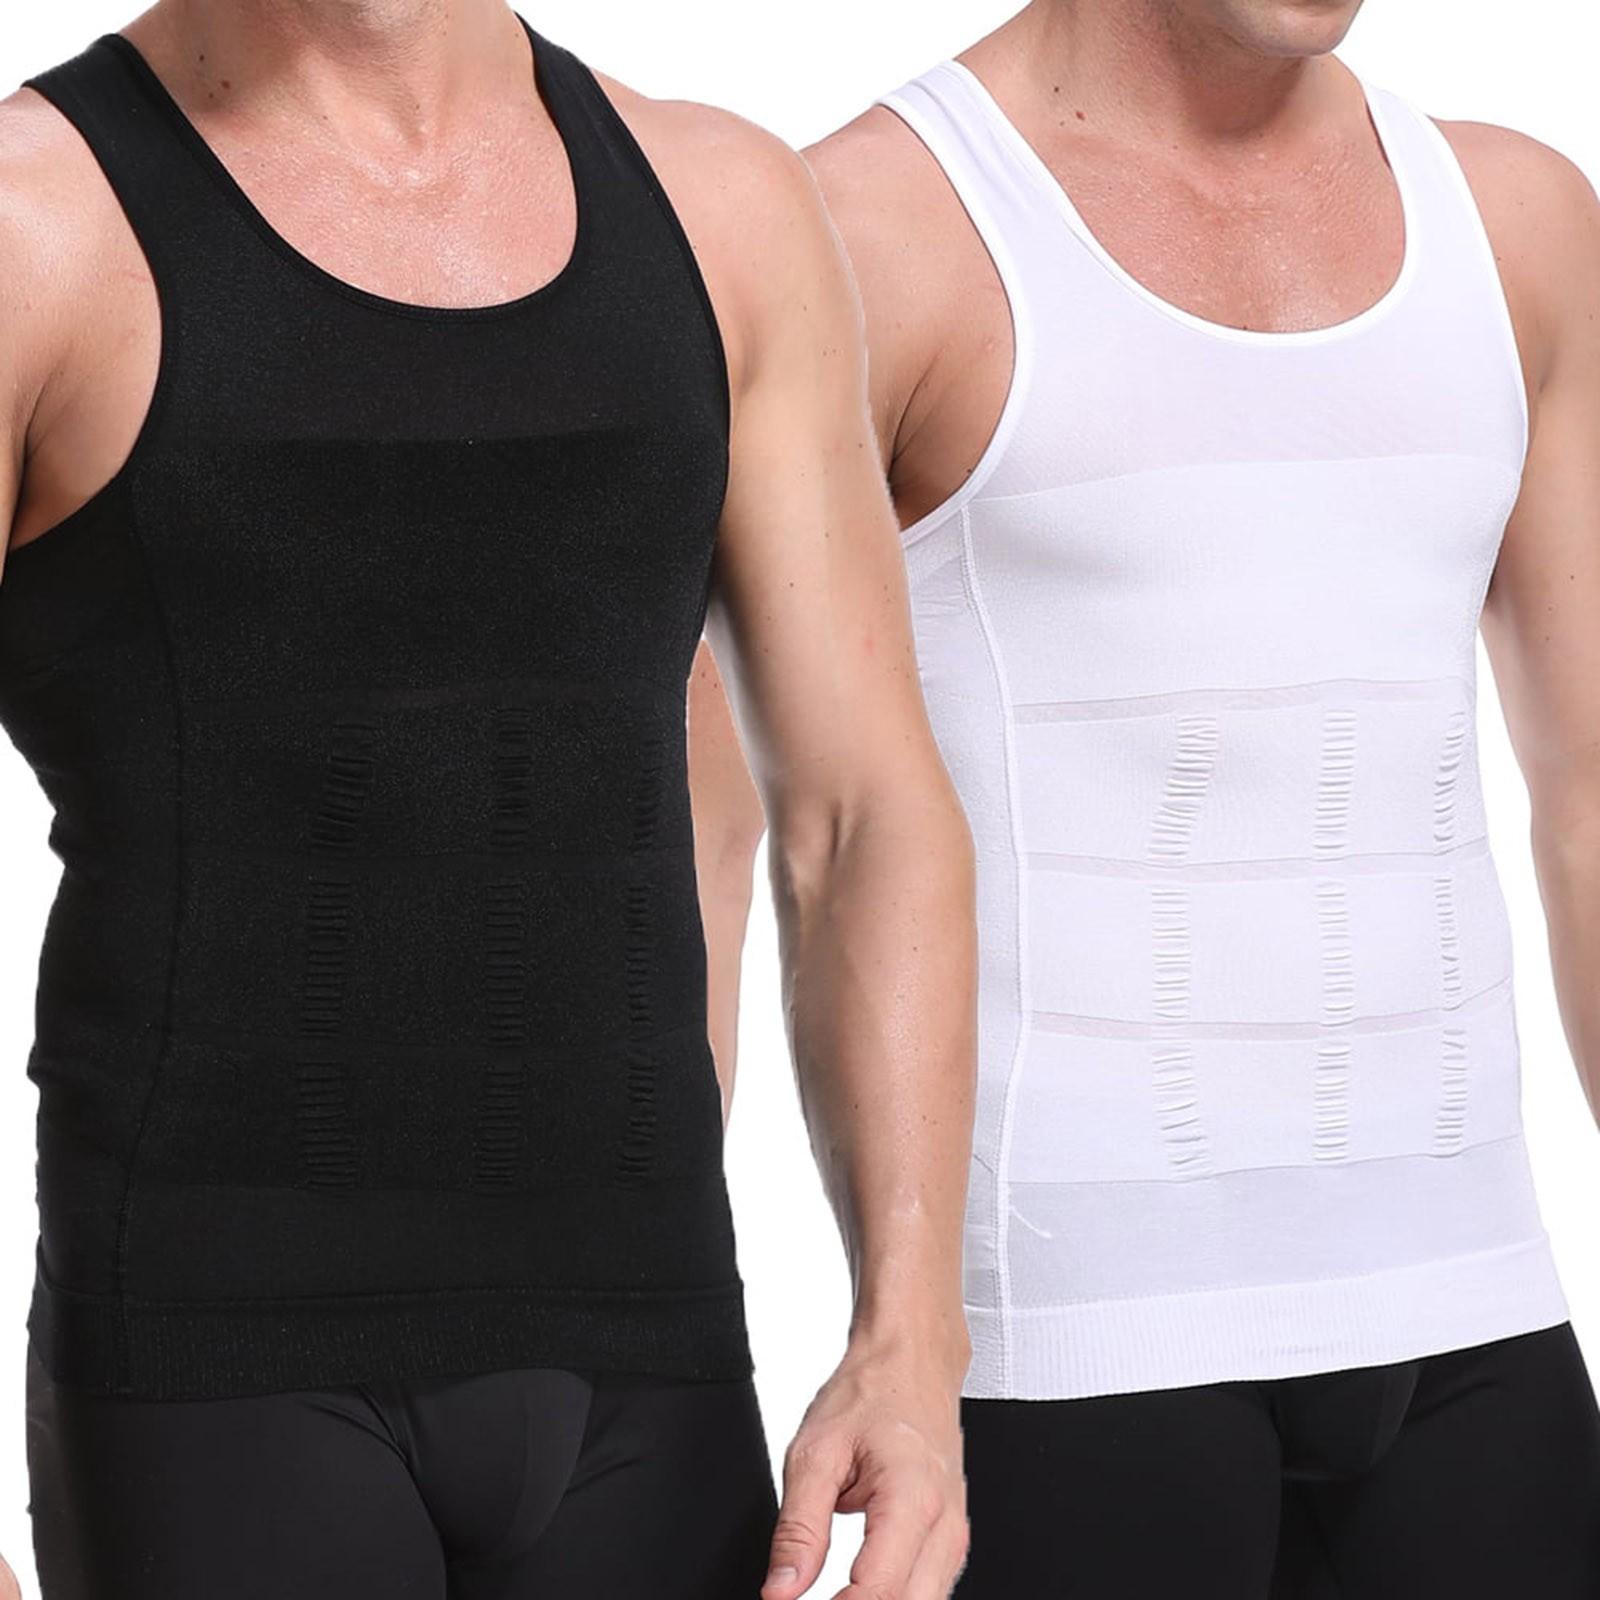 Lolili (Qunide) Mannen Afslanken Body Shaper Mannelijke Compressie Shirt Shapewear Tank Top